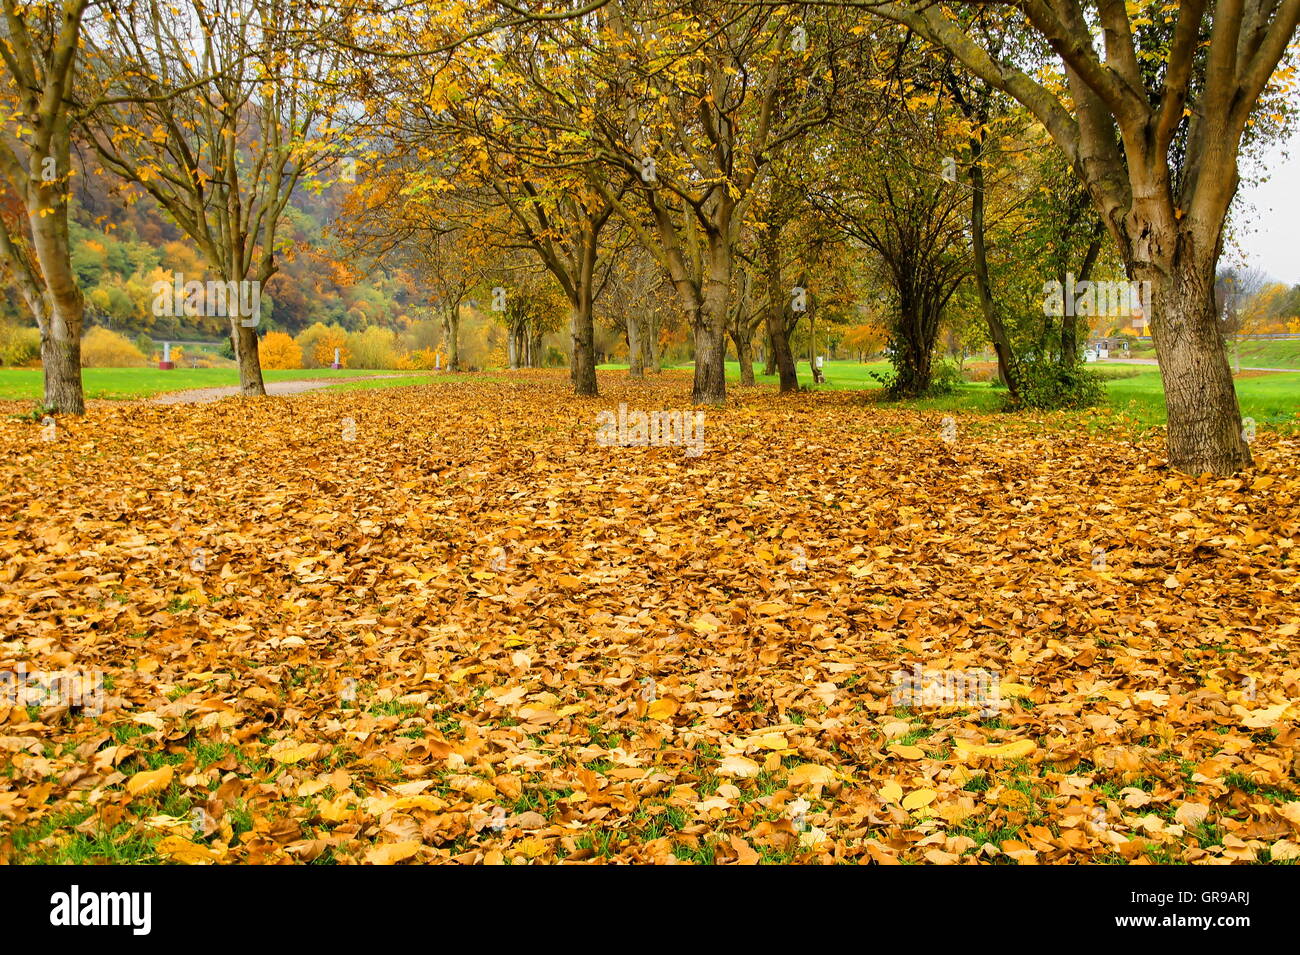 Grupo de árboles y abundante follaje de otoño en Enkirch en Mosela Foto de stock